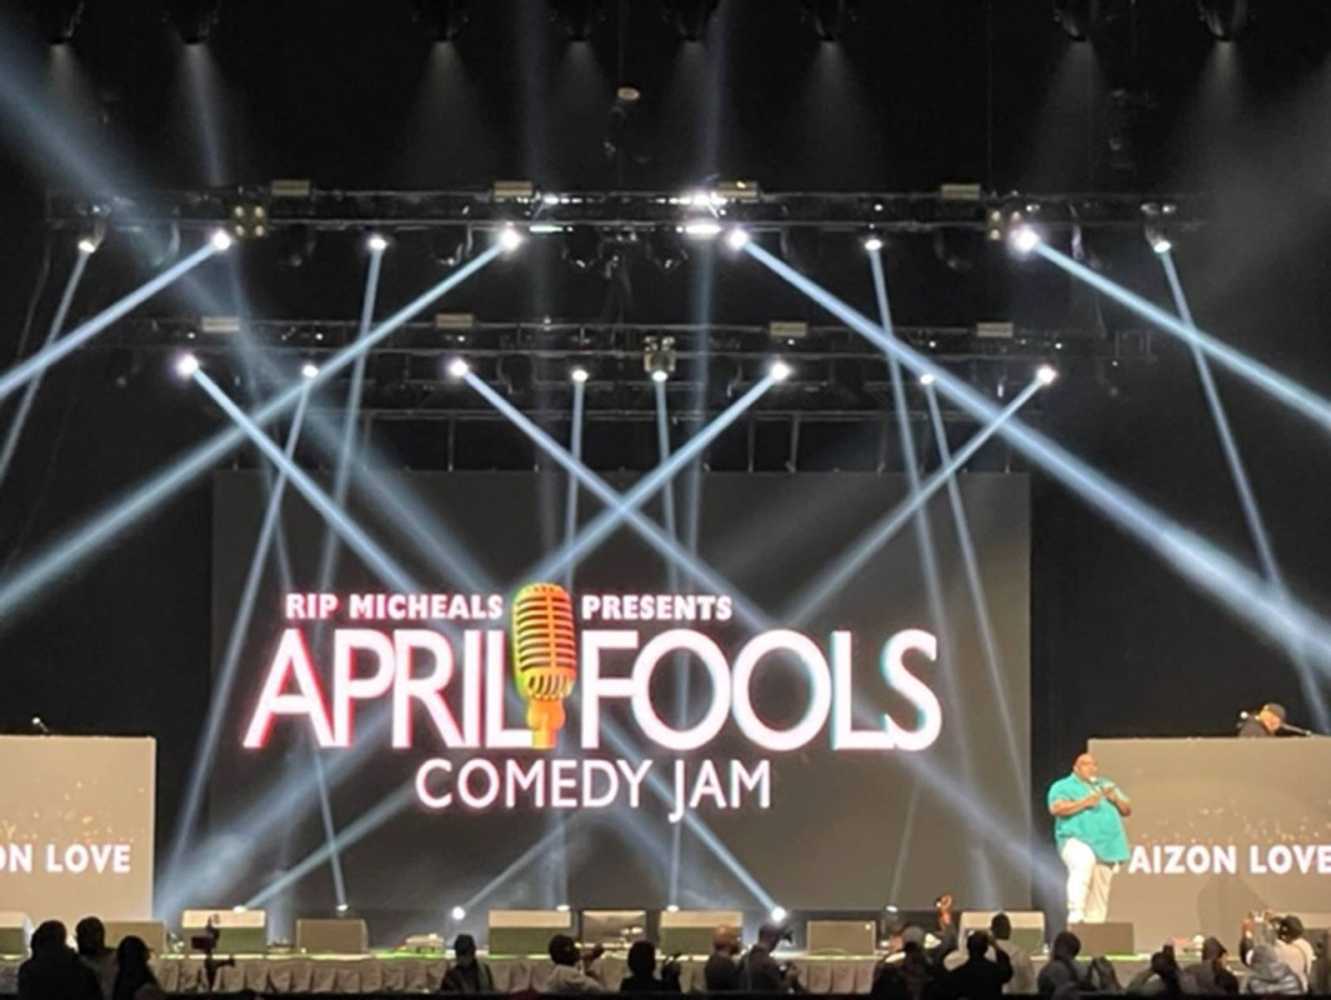 The April Fools Comedy Jam at Brooklyn’s Barclays Centre